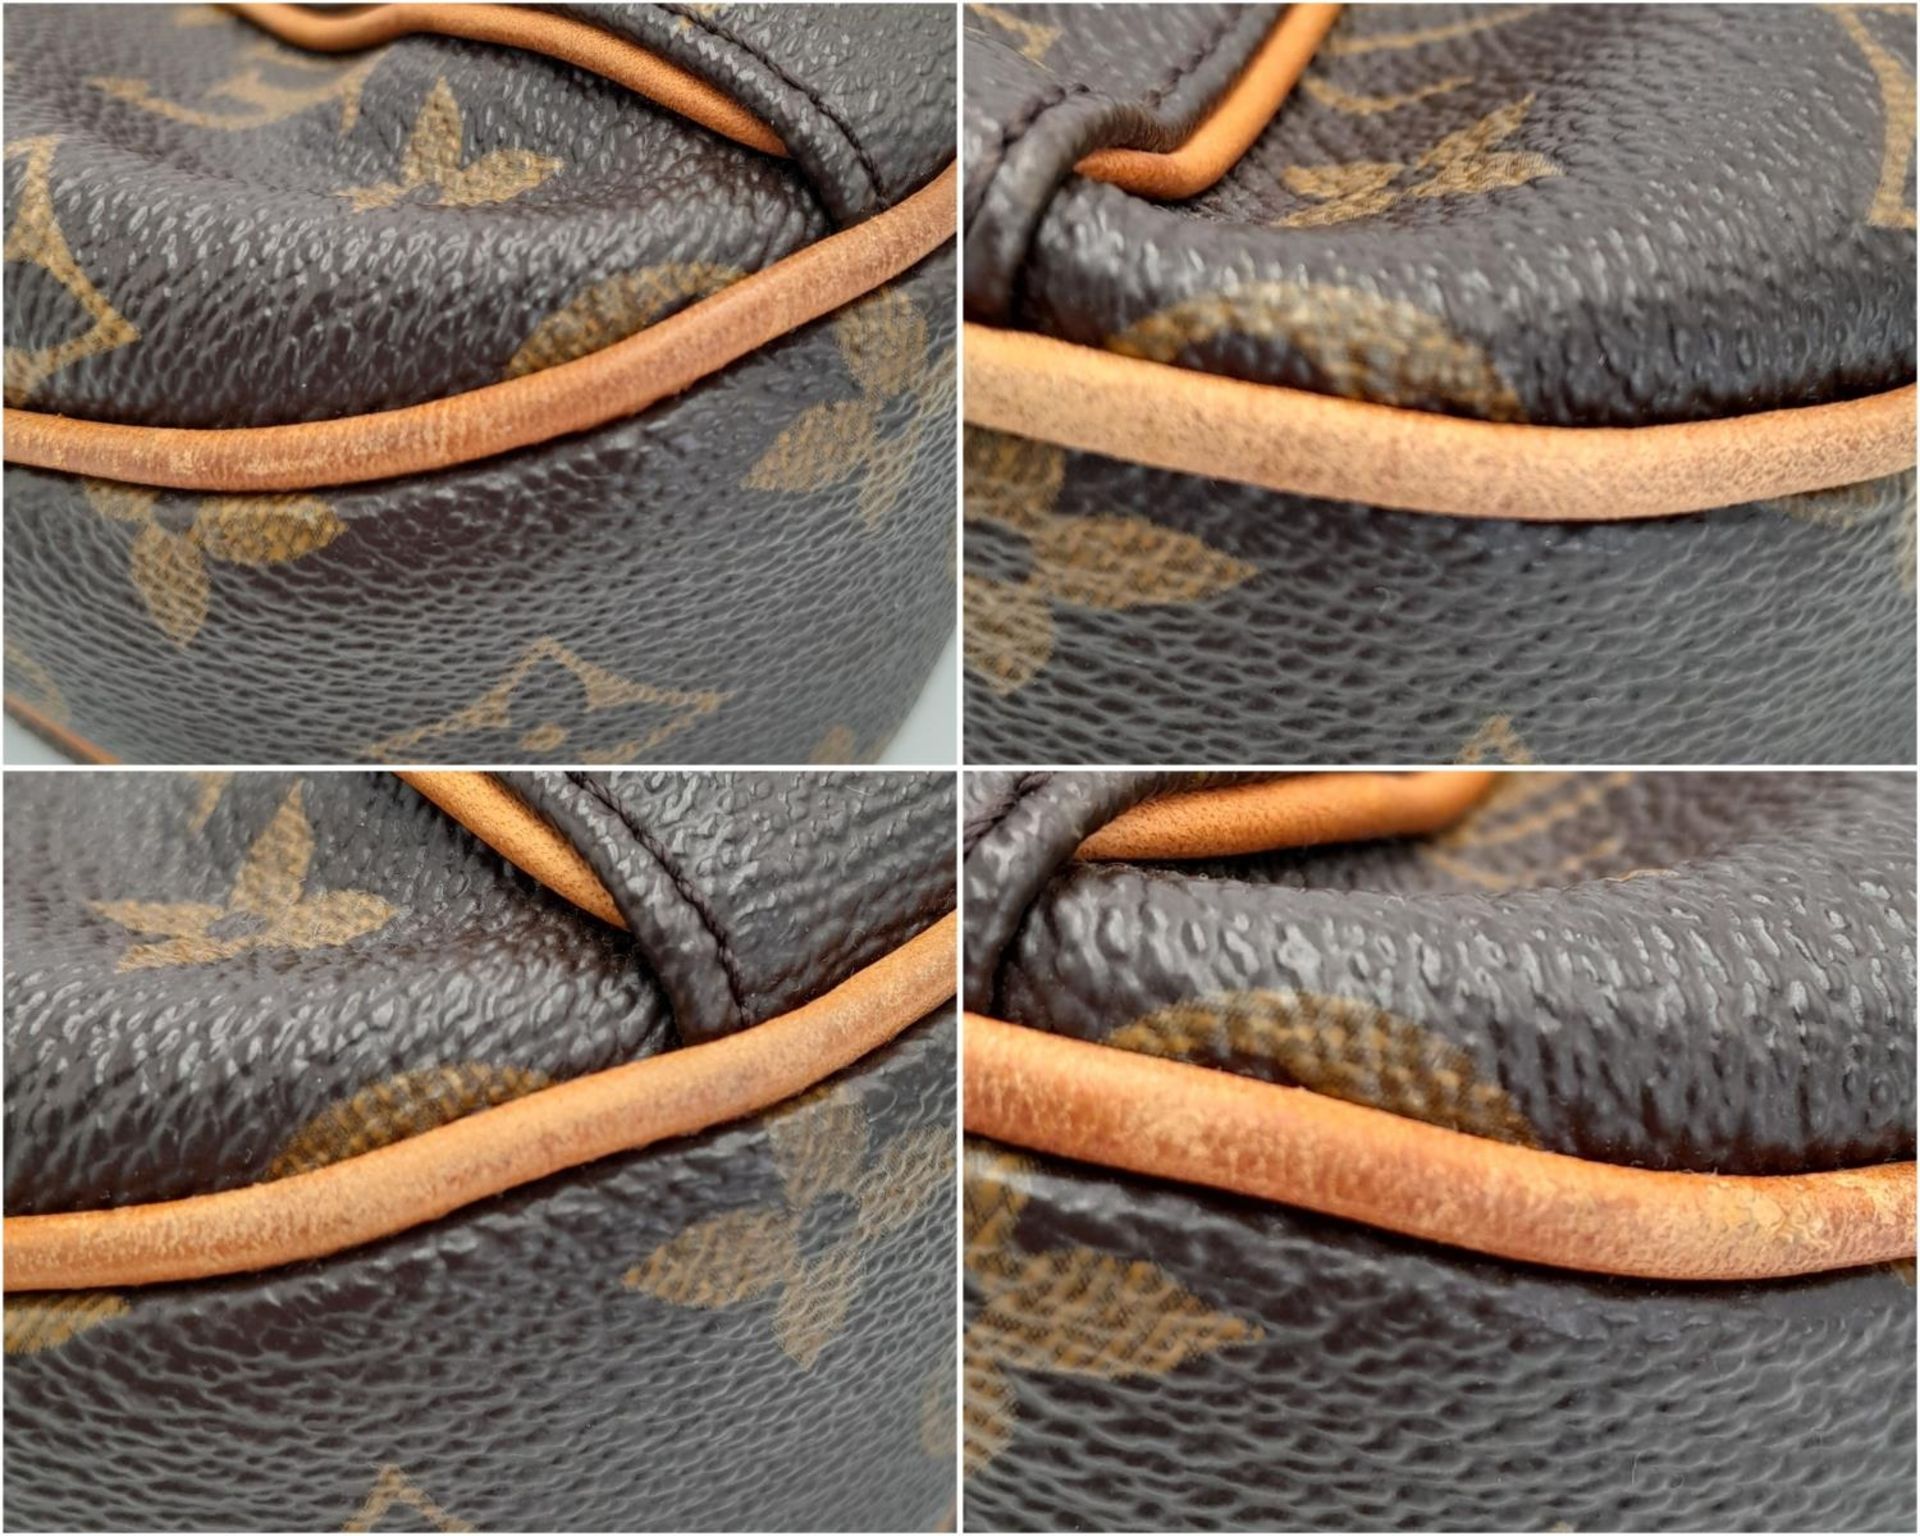 A Louis Vuitton Thames Shoulder Bag. Monogramed canvas exterior with gold-toned hardware, adjustable - Image 6 of 9